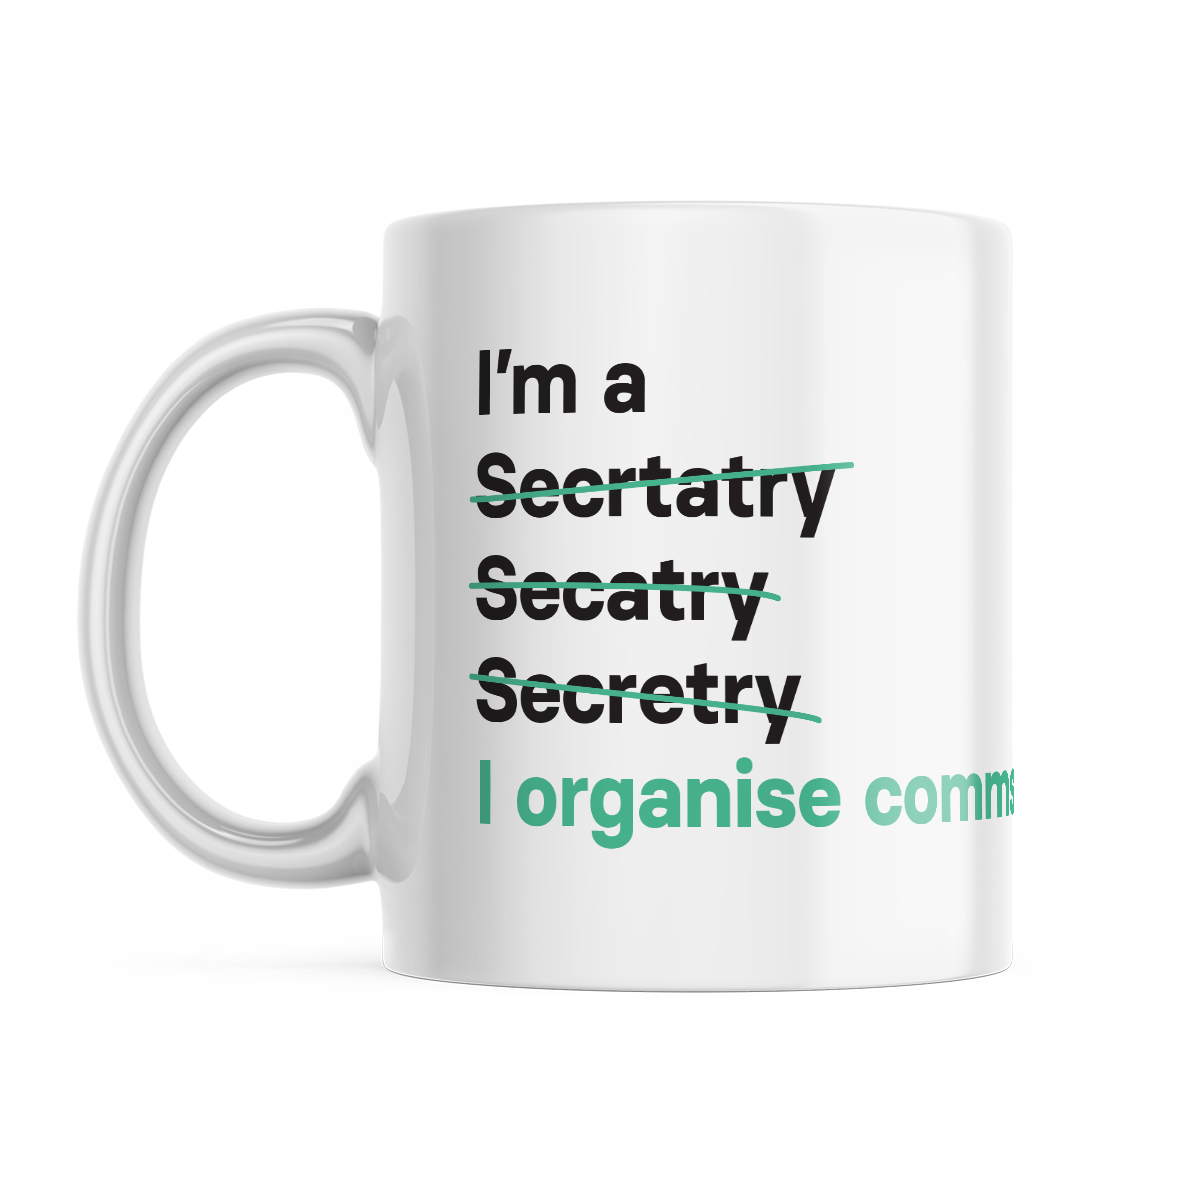 I'm a Secretary